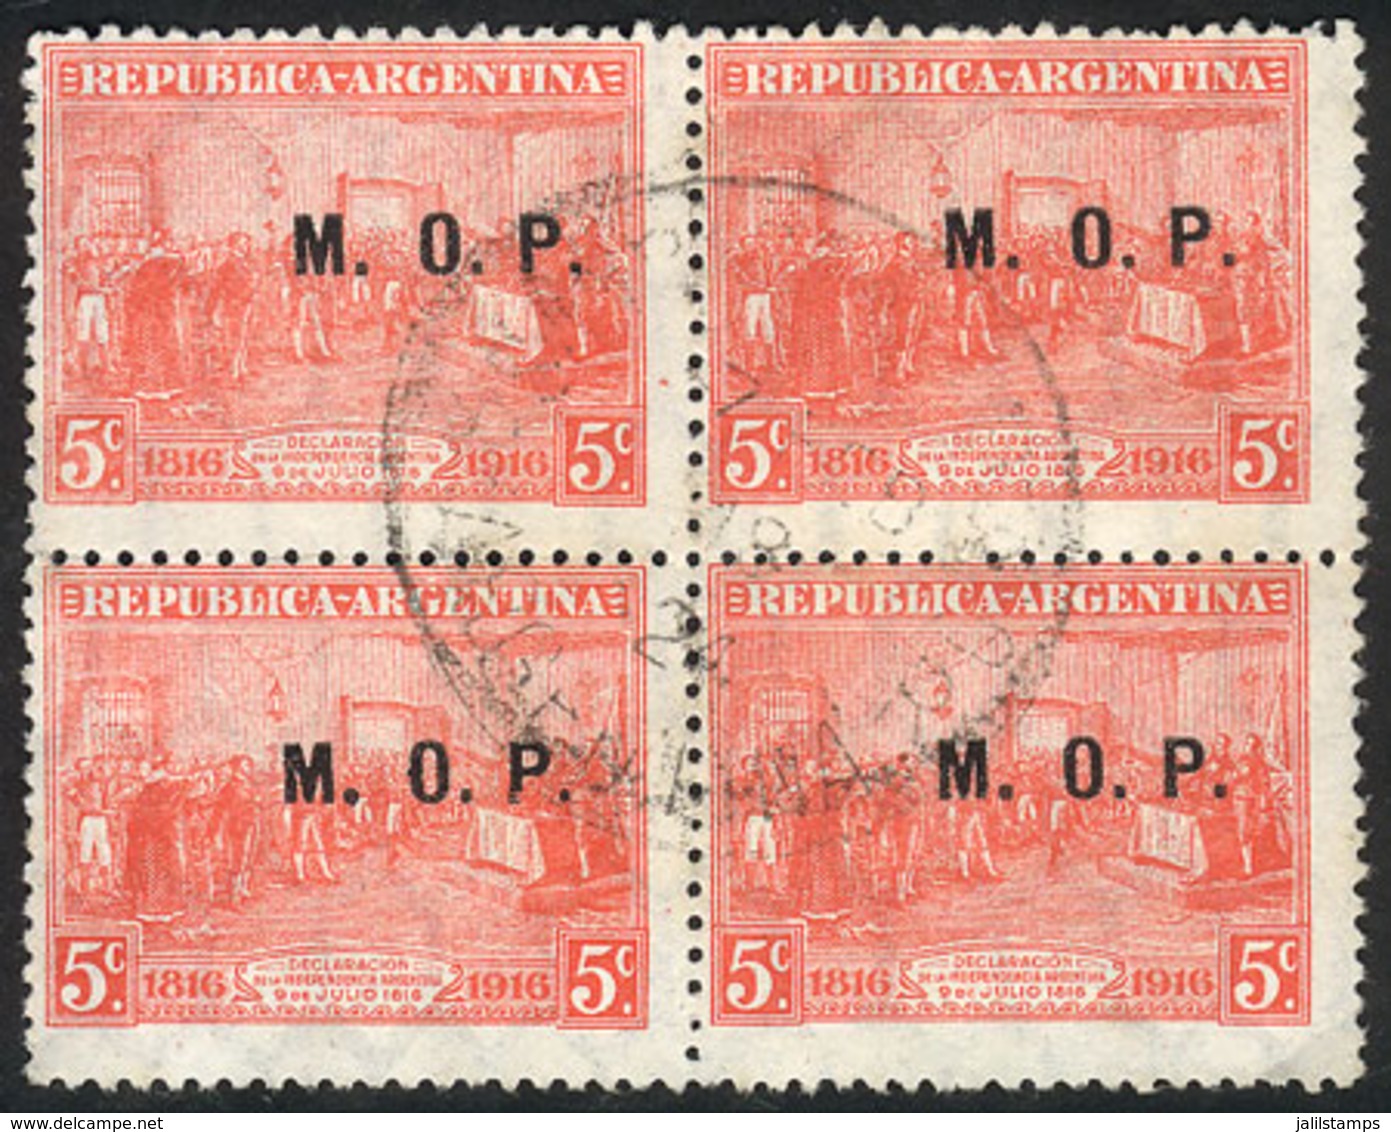 ARGENTINA: GJ.525, 1916 5c. Centenary With M.O.P. Overprint, Rare Used Block Of 4, VF Quality! - Officials